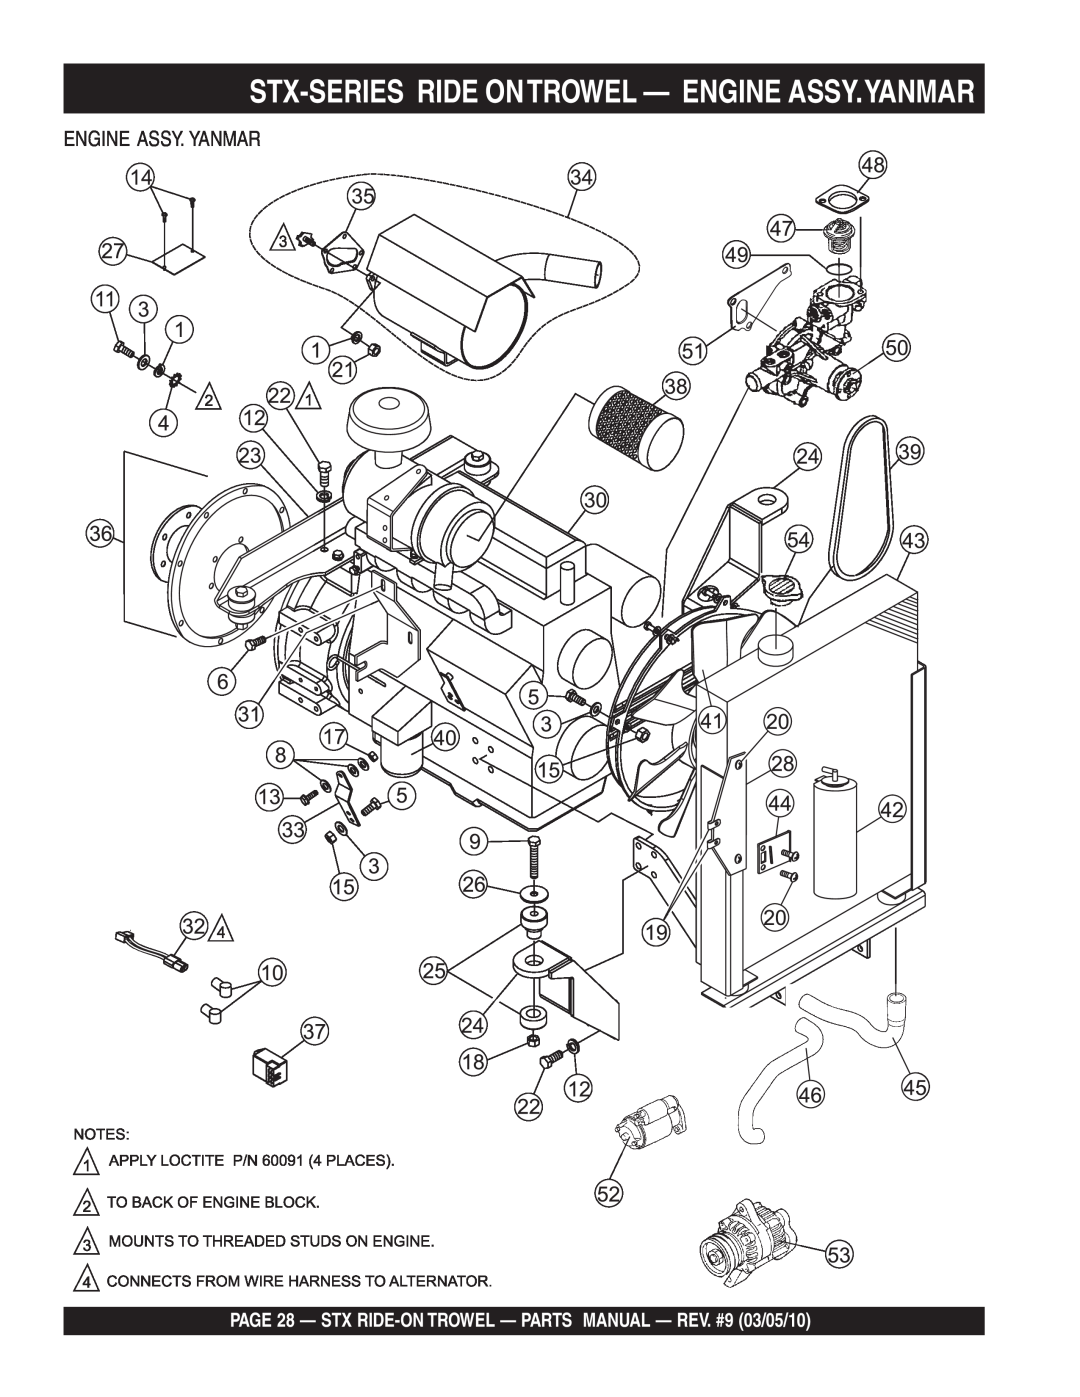 Multiquip STX55Y6, STX55J6 manual Stx-Series Ride Ontrowel - Engine Assy.Yanmar, Engine Assy. Yanmar 